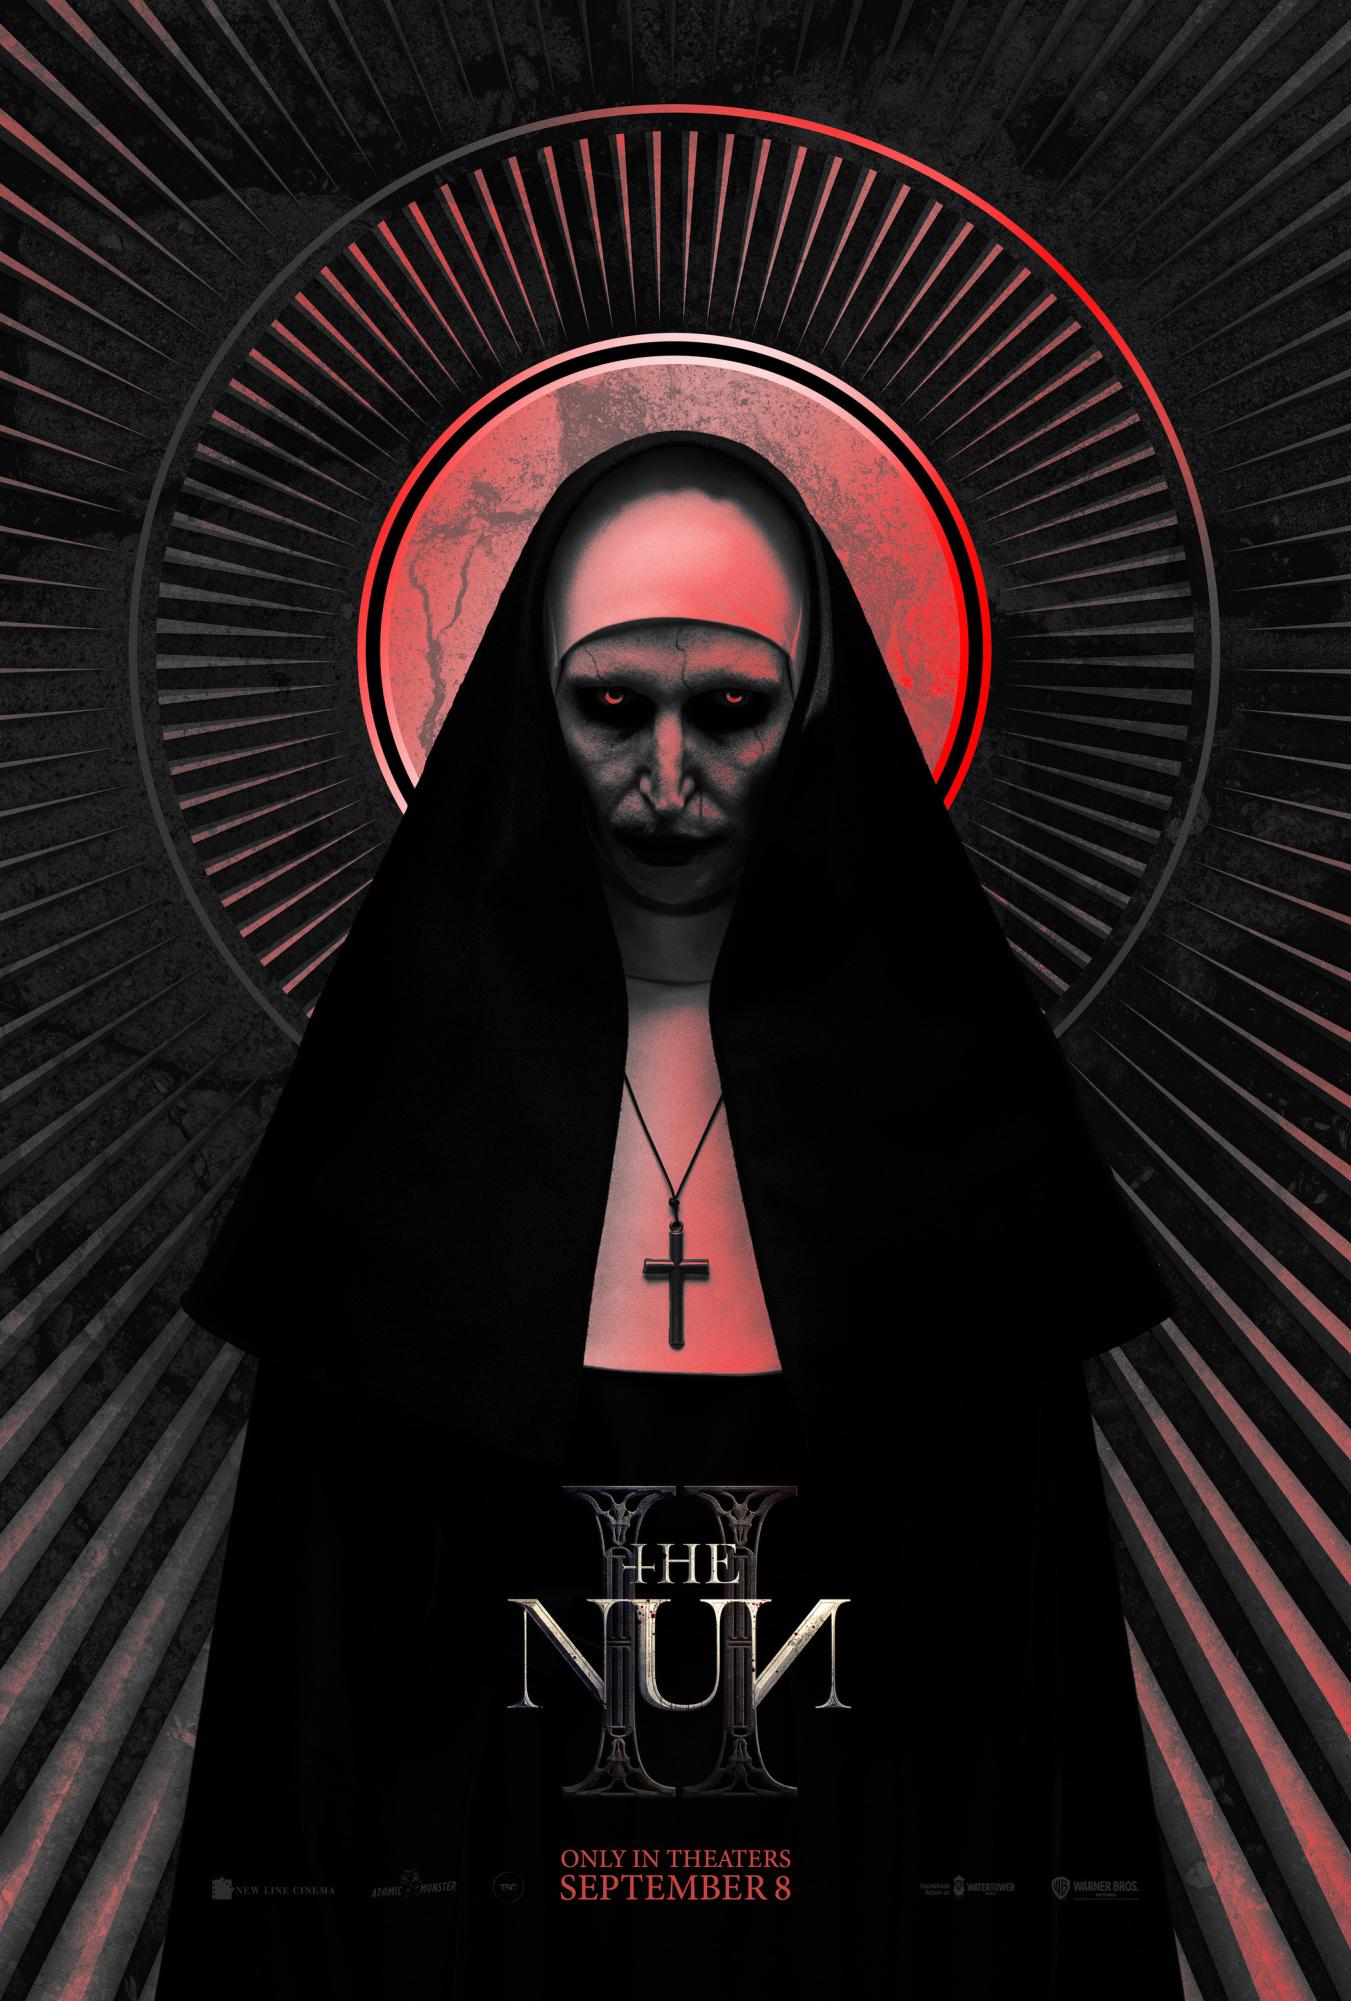 The Nun II: A lackluster sequel